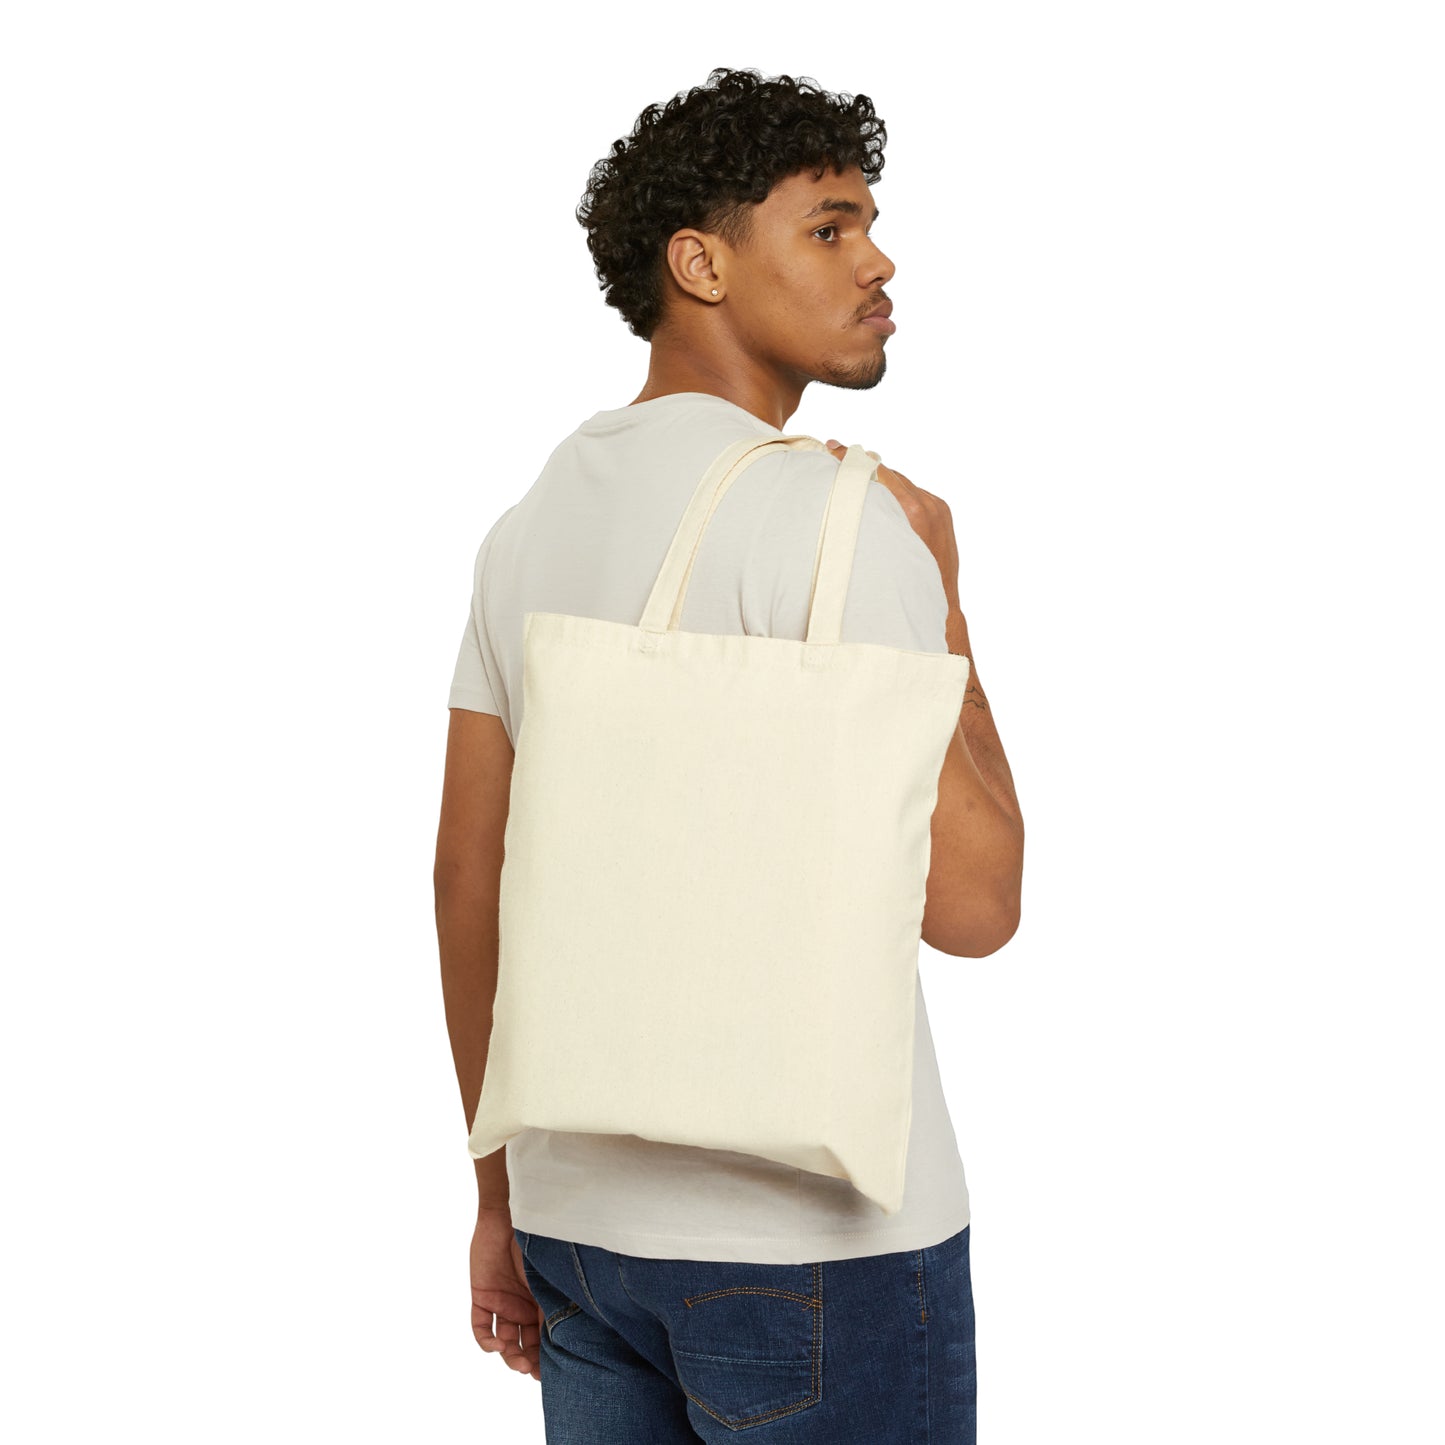 Faith - Cotton Canvas Tote Bag